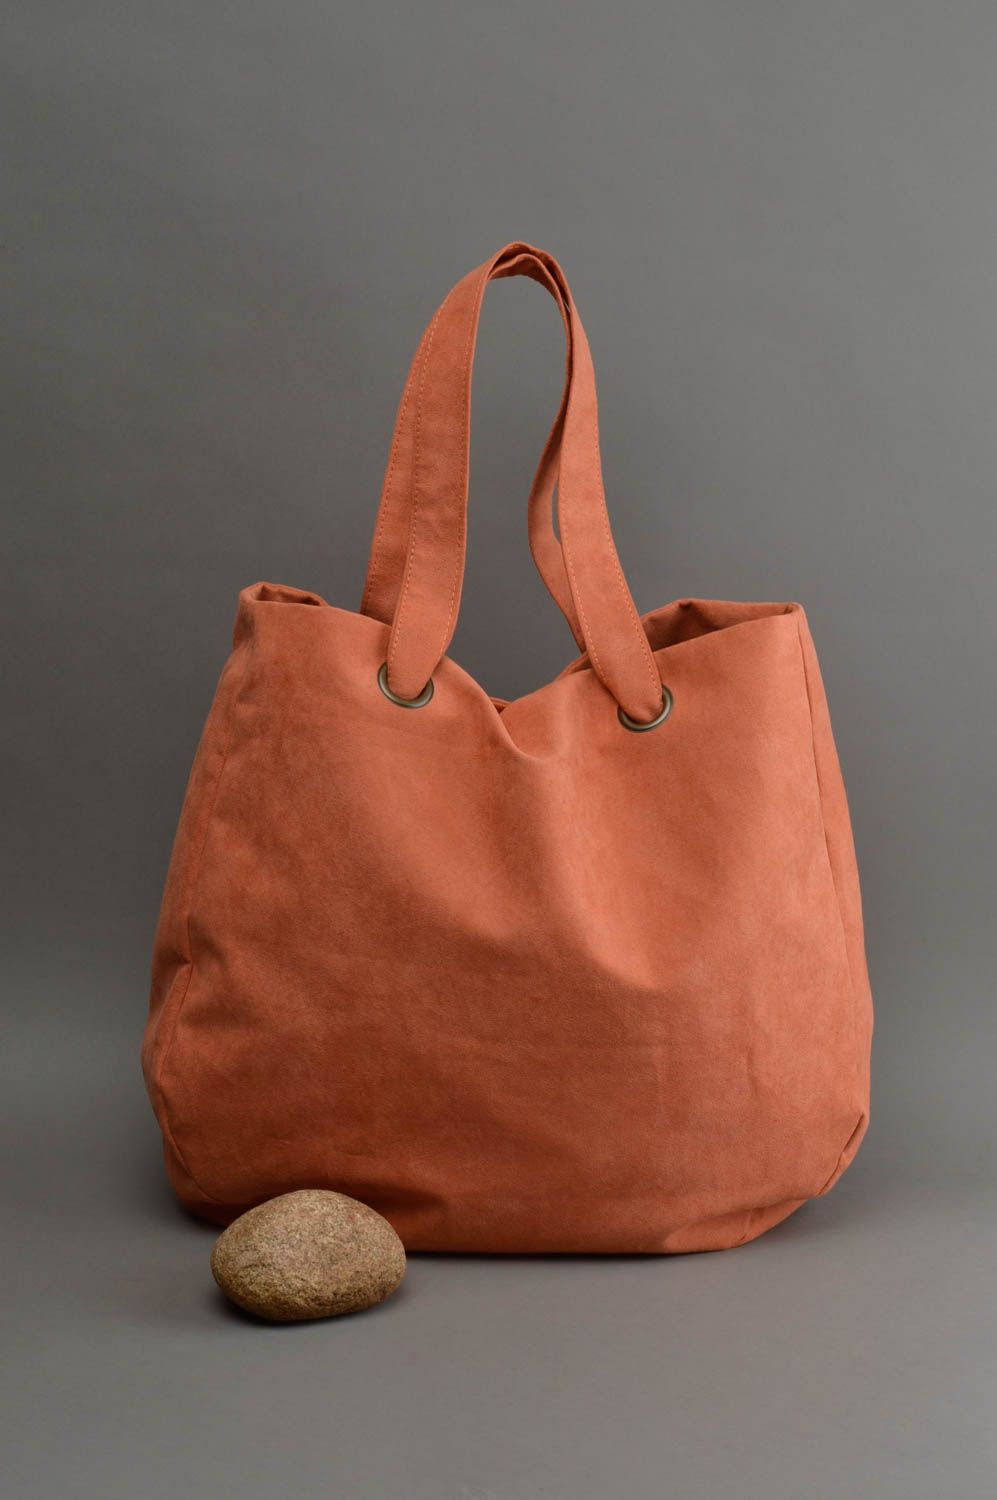 Designer handbag handmade bag for women red fabric purse suede bag gift for her photo 1